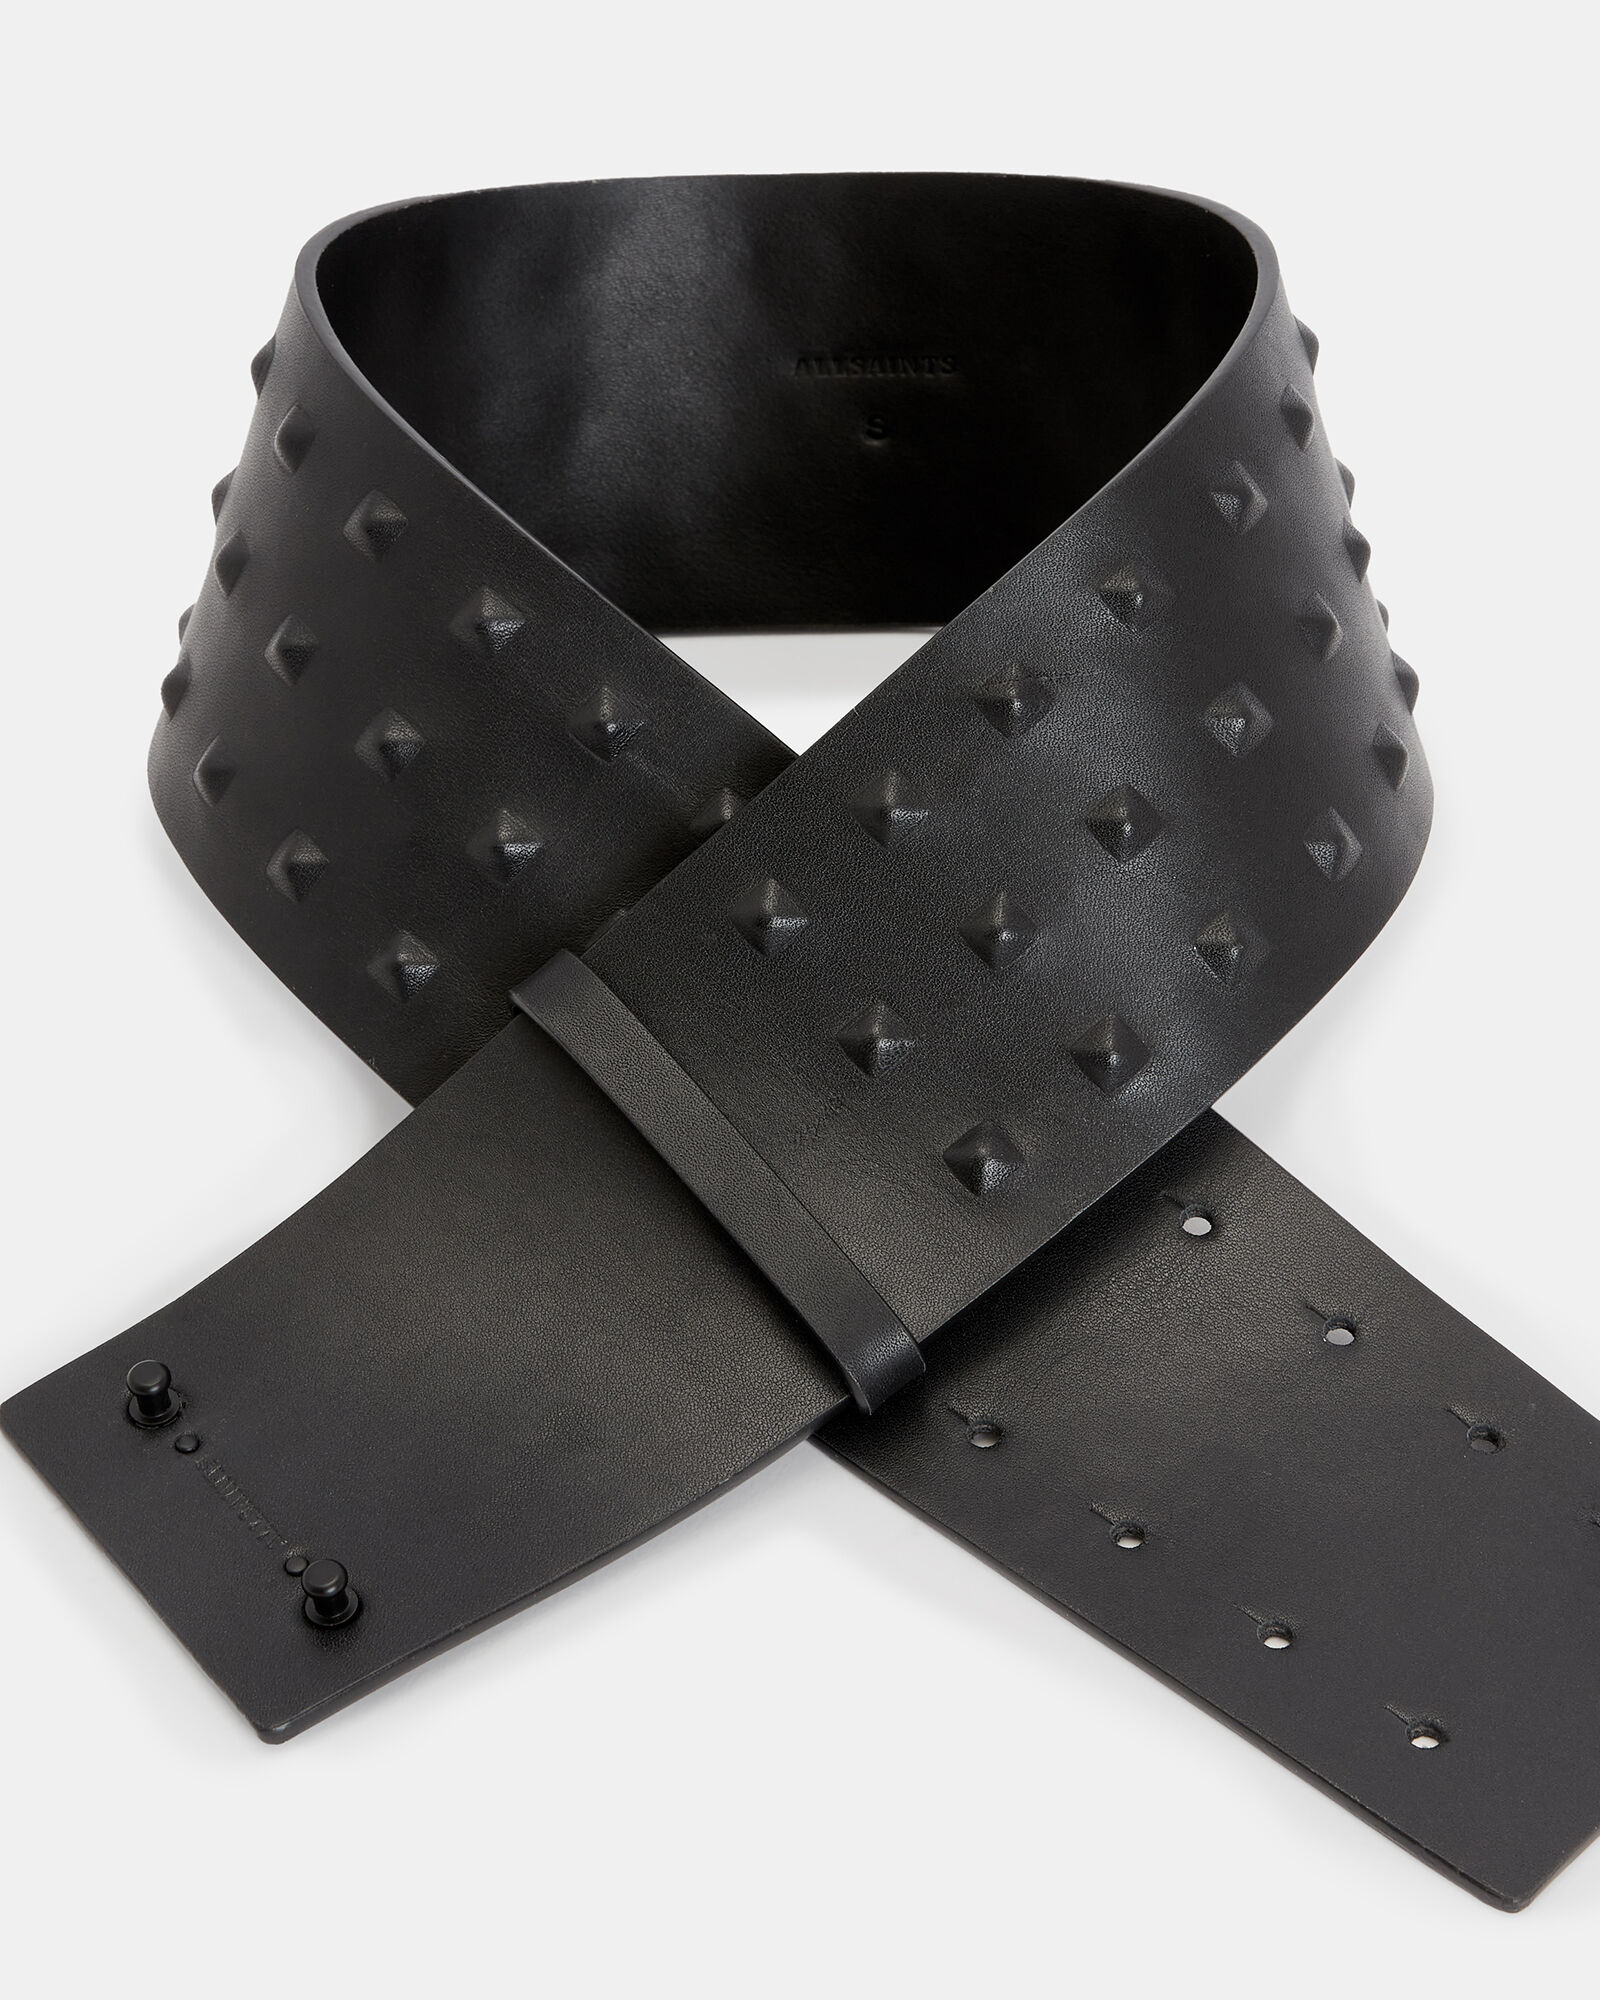 Lara Studded Leather Waist Belt